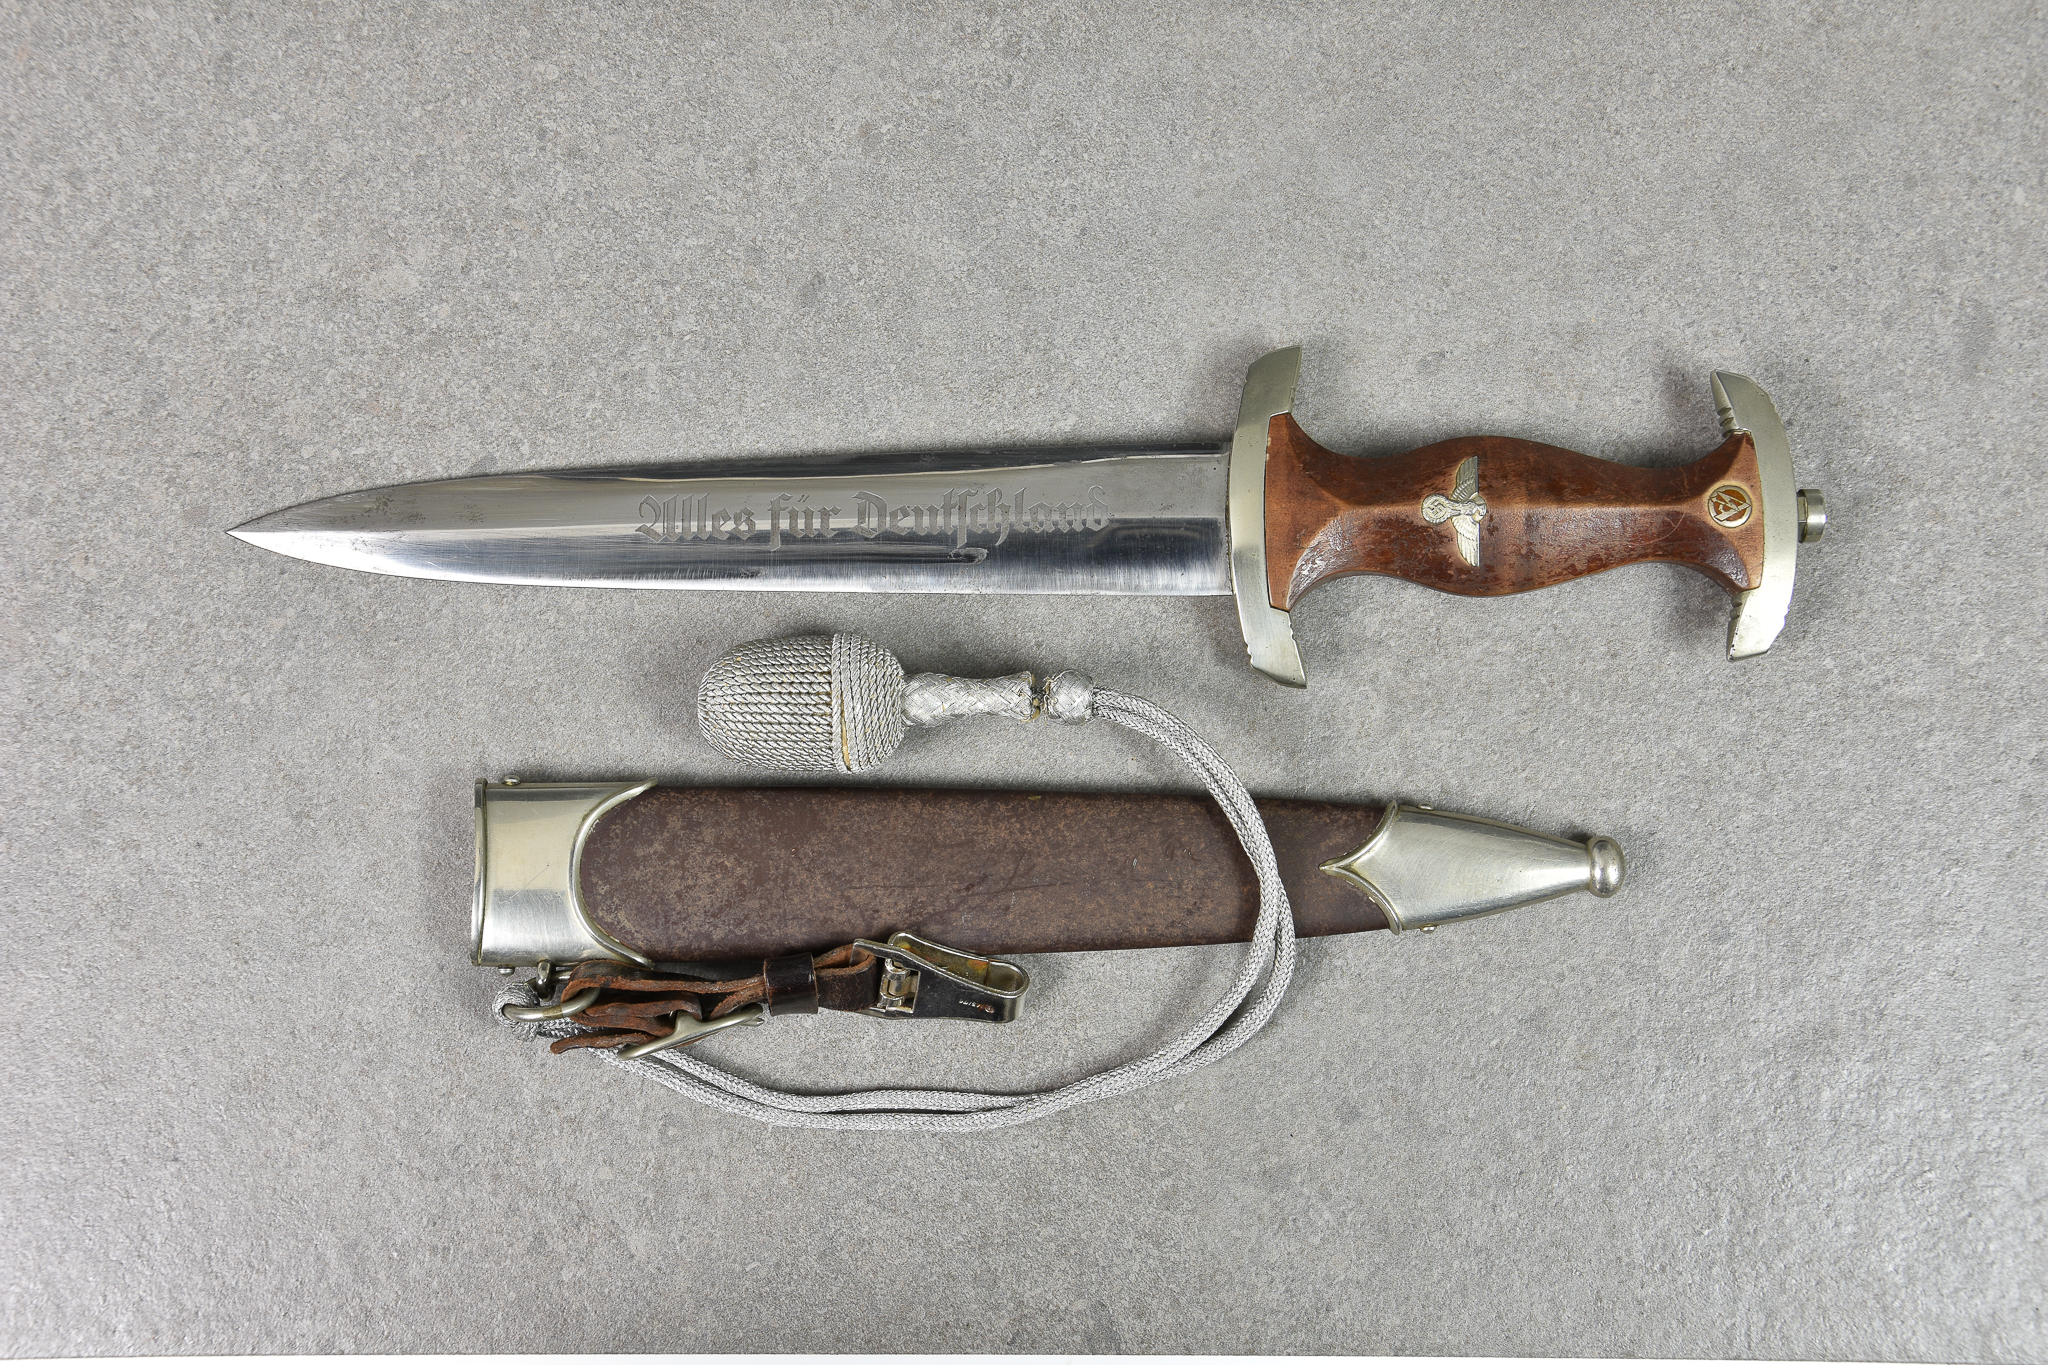 Guernsey German Occupation interest - A German Third Reich SA (Sturmabellung, Brown Shirt) dagger,